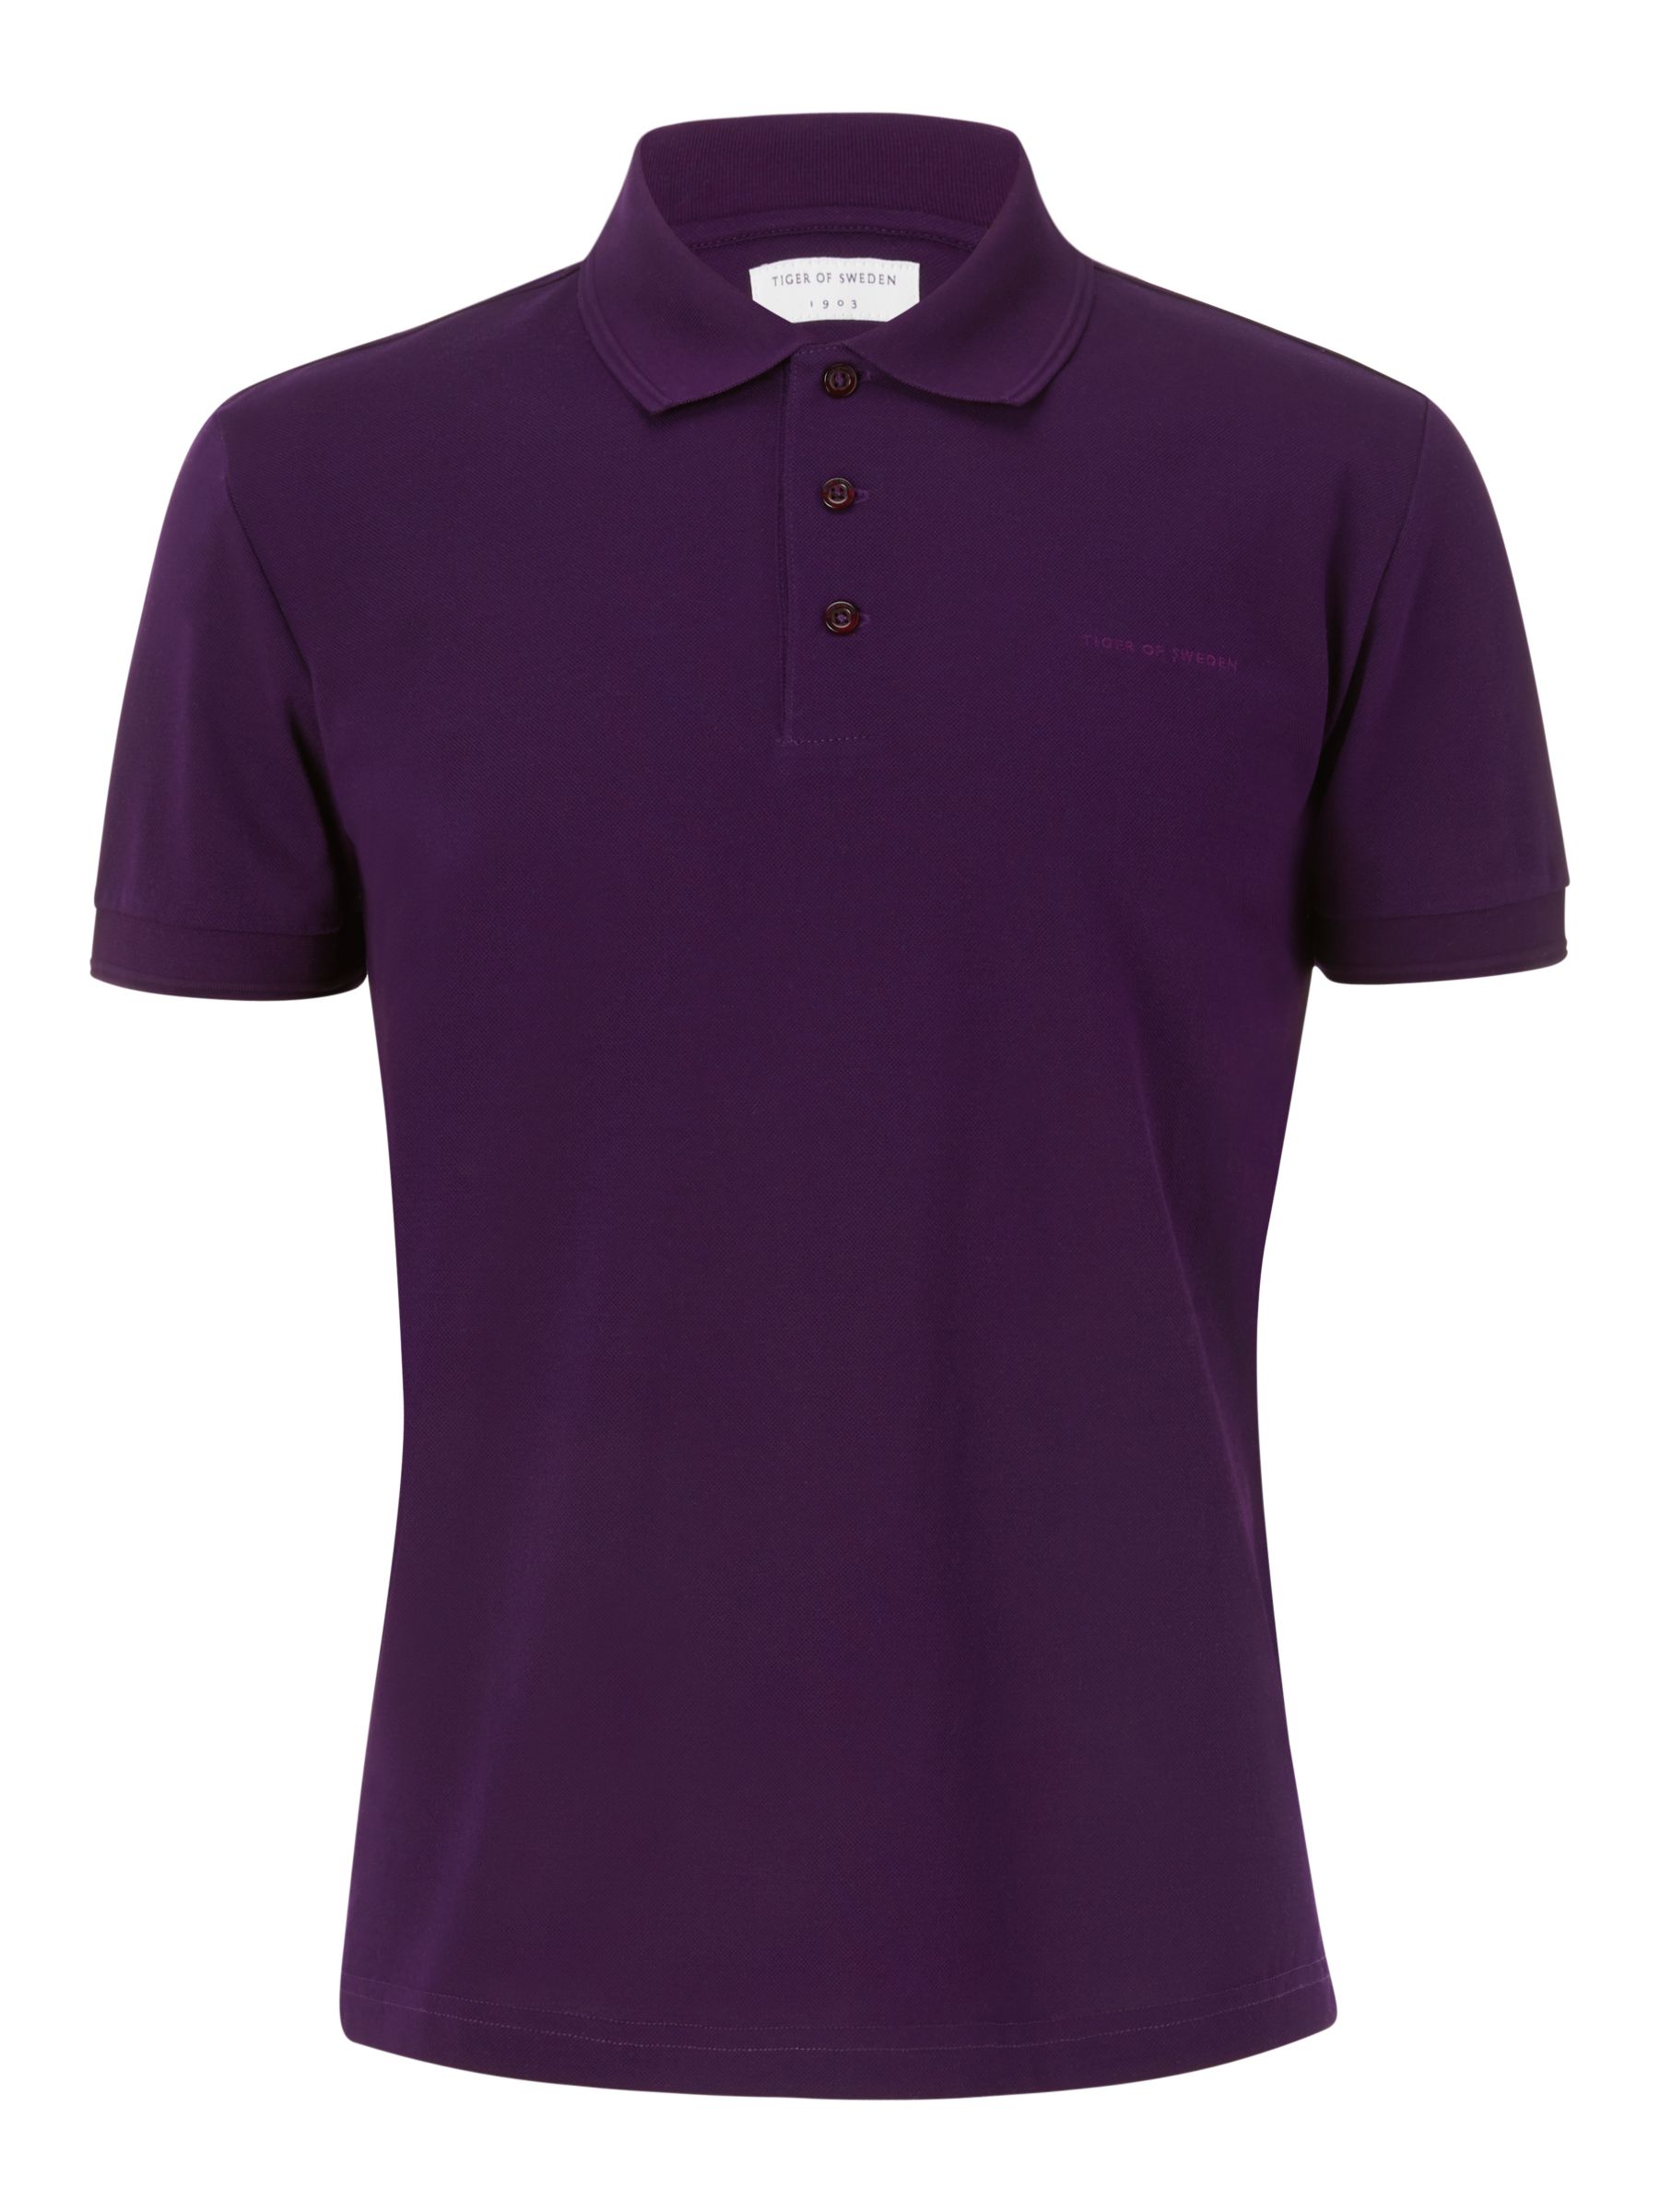 Tiger of Sweden Darios Polo Shirt, Purple at John Lewis & Partners